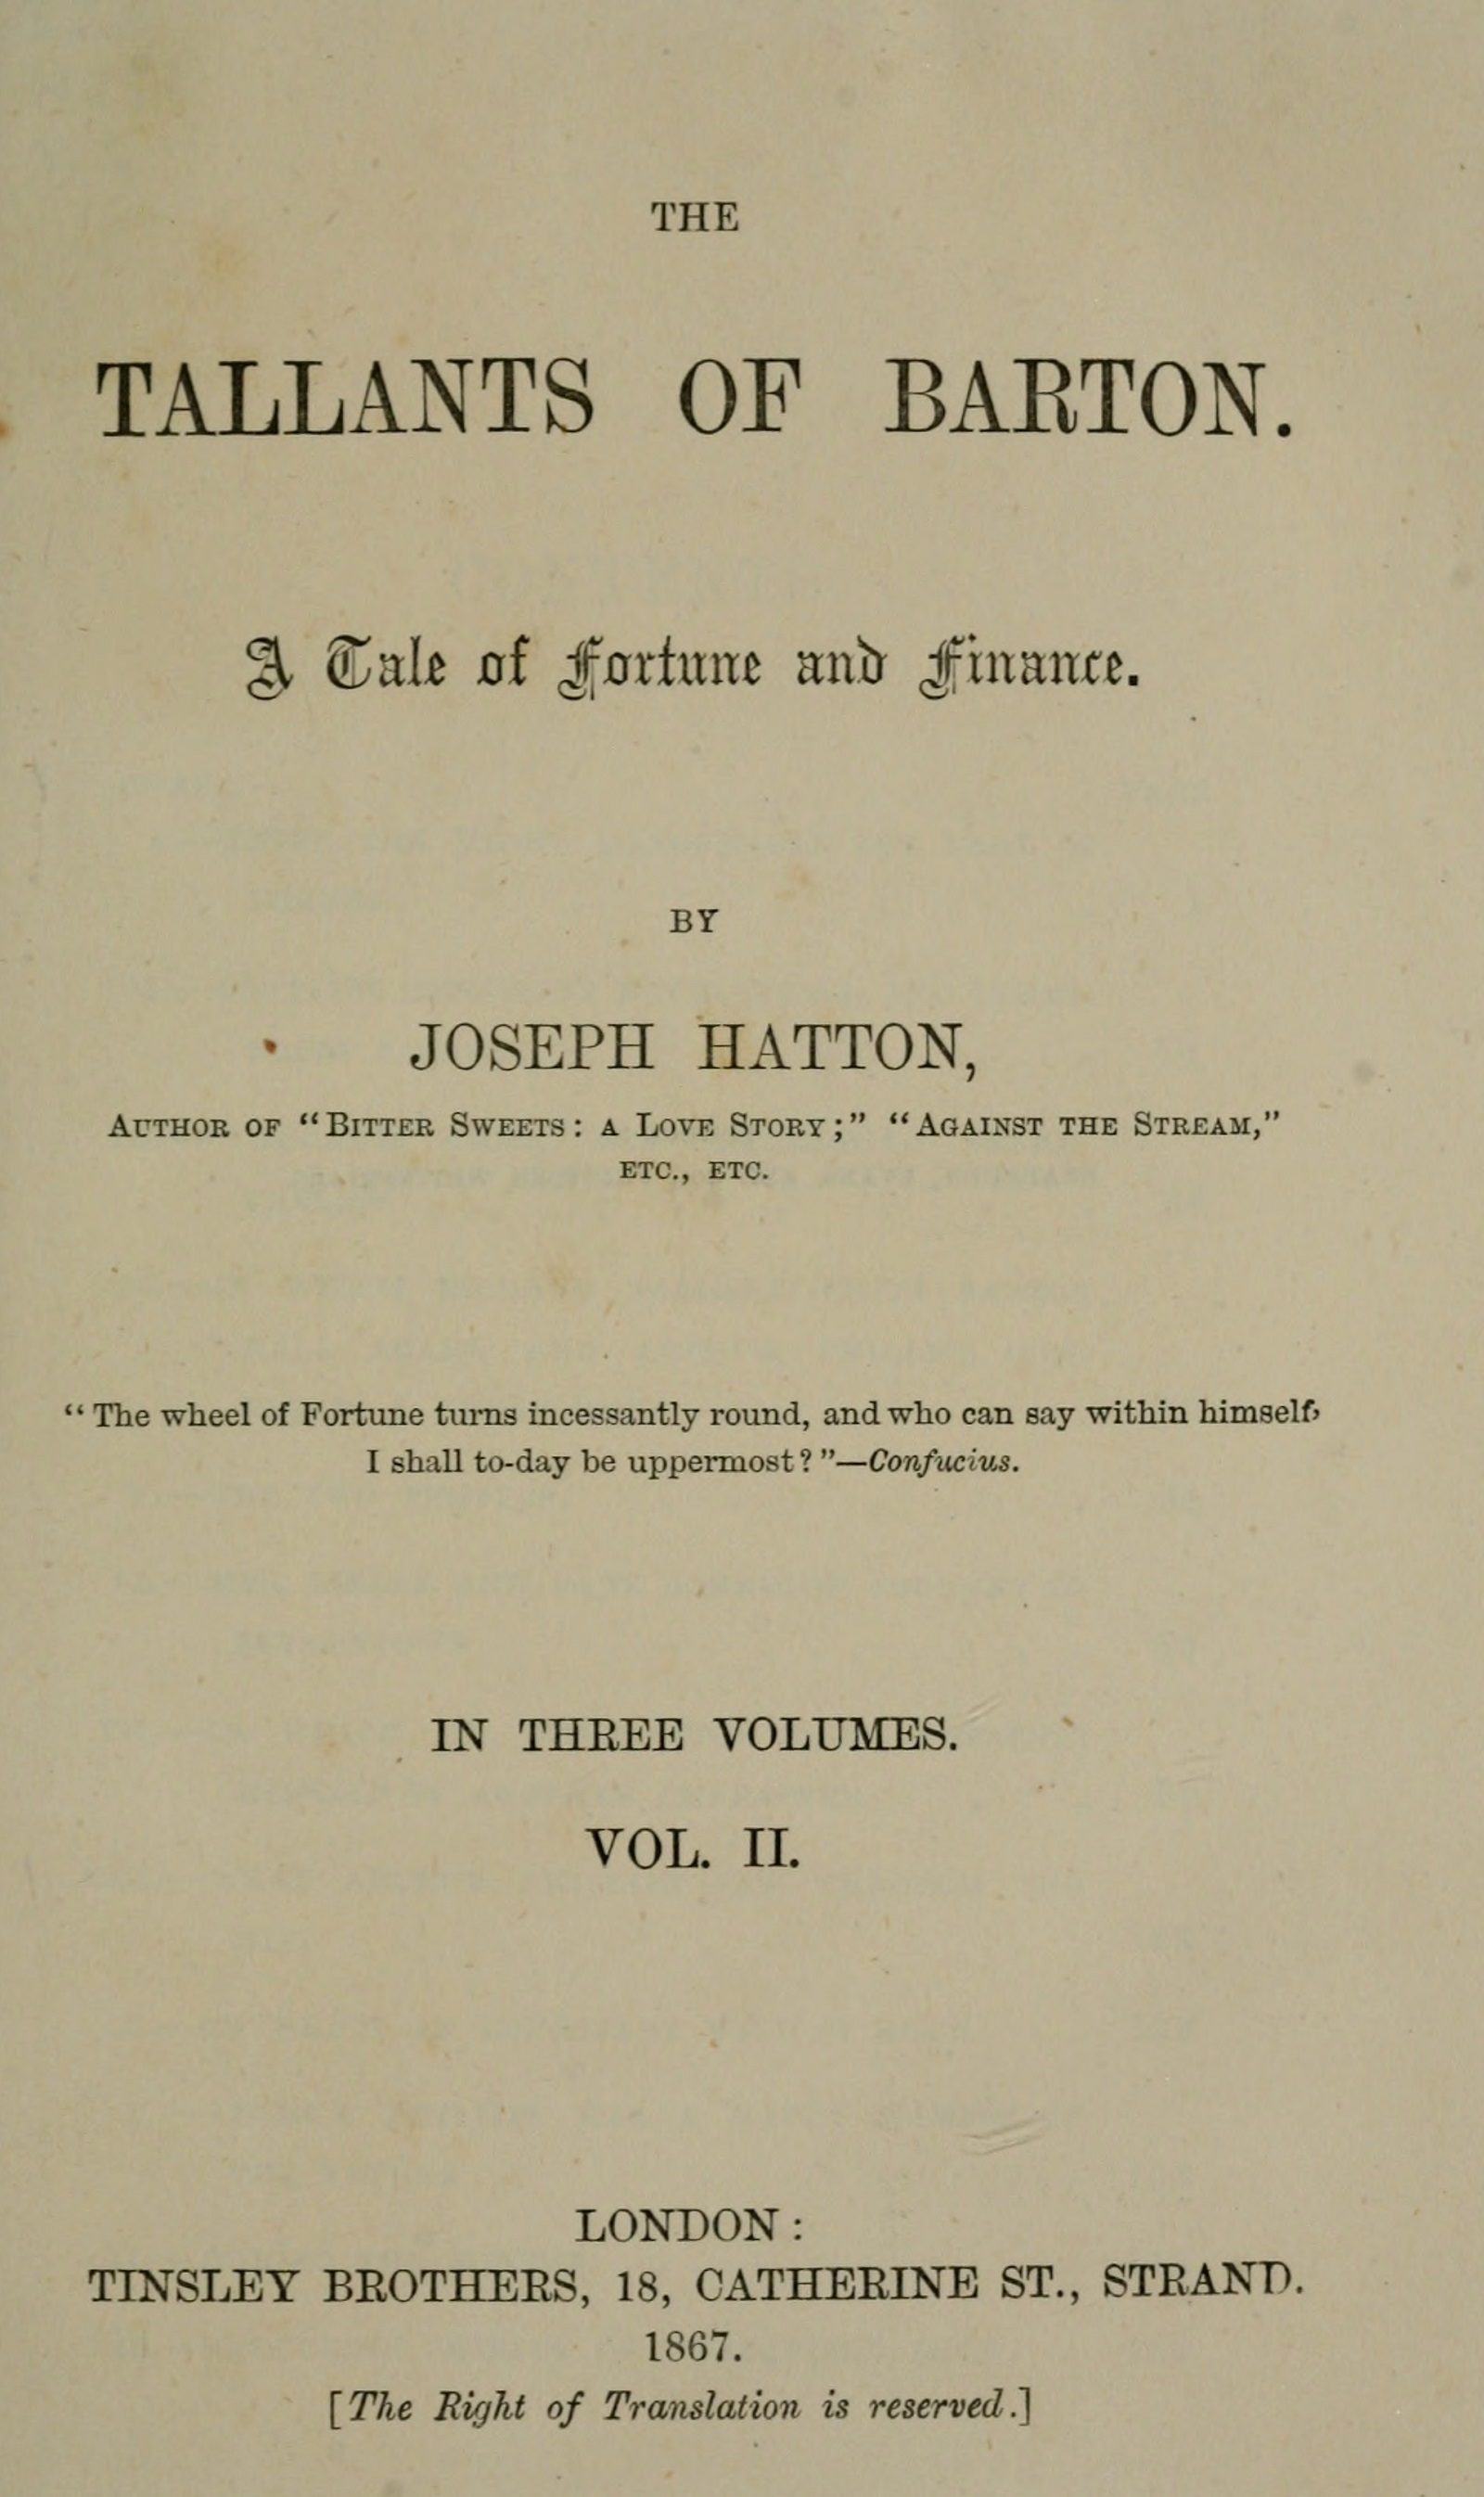 The Tallants of Barton Volume II